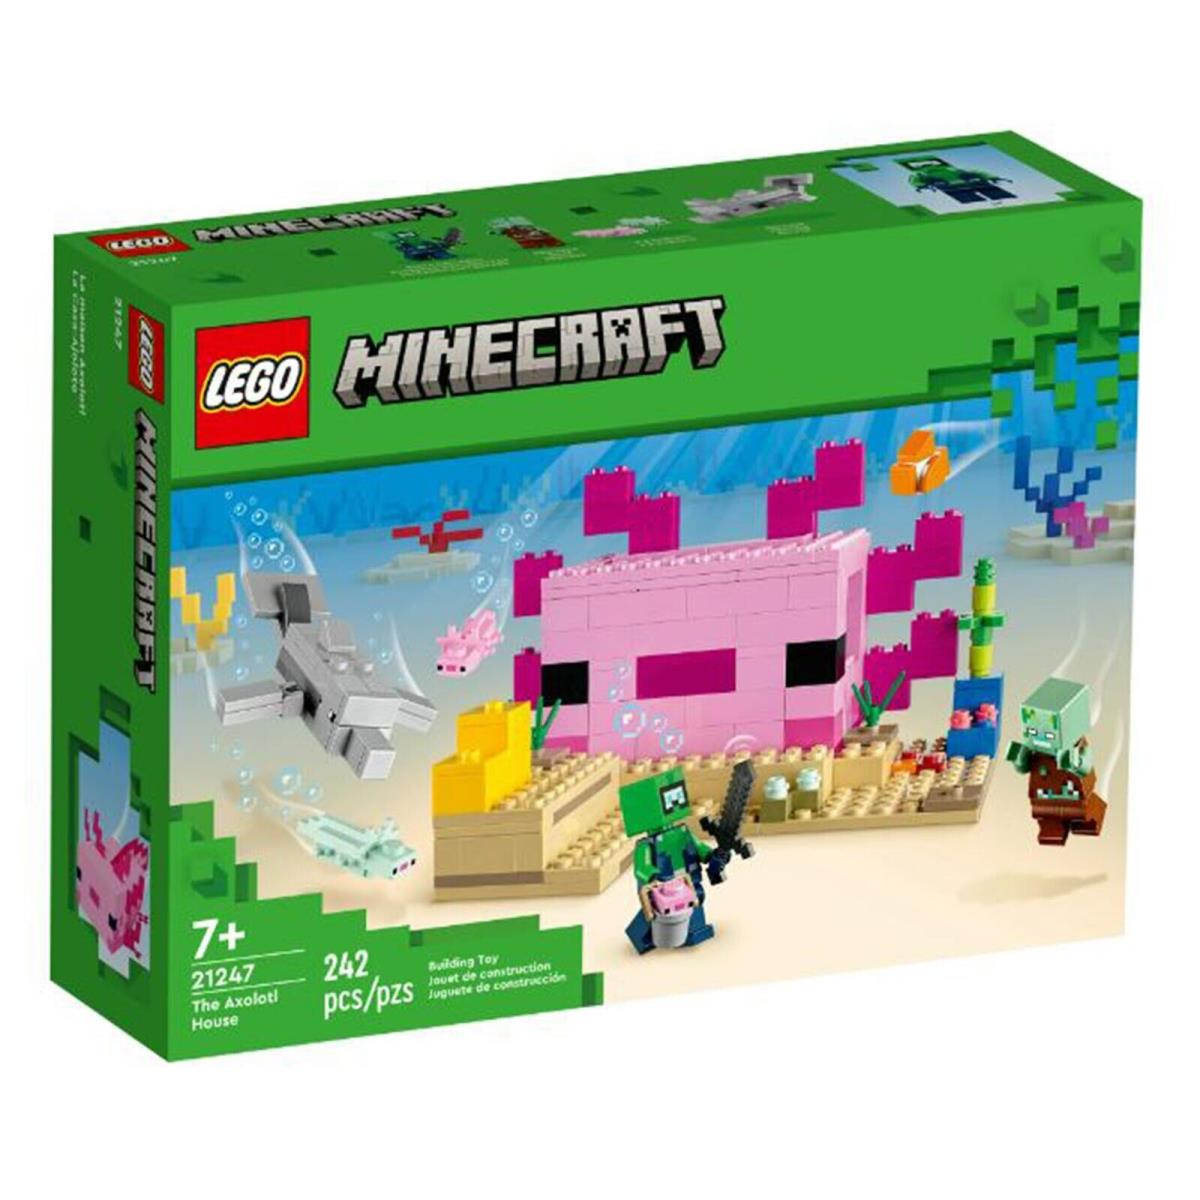 Lego Minecraft The Axolotl House Building Set 21247